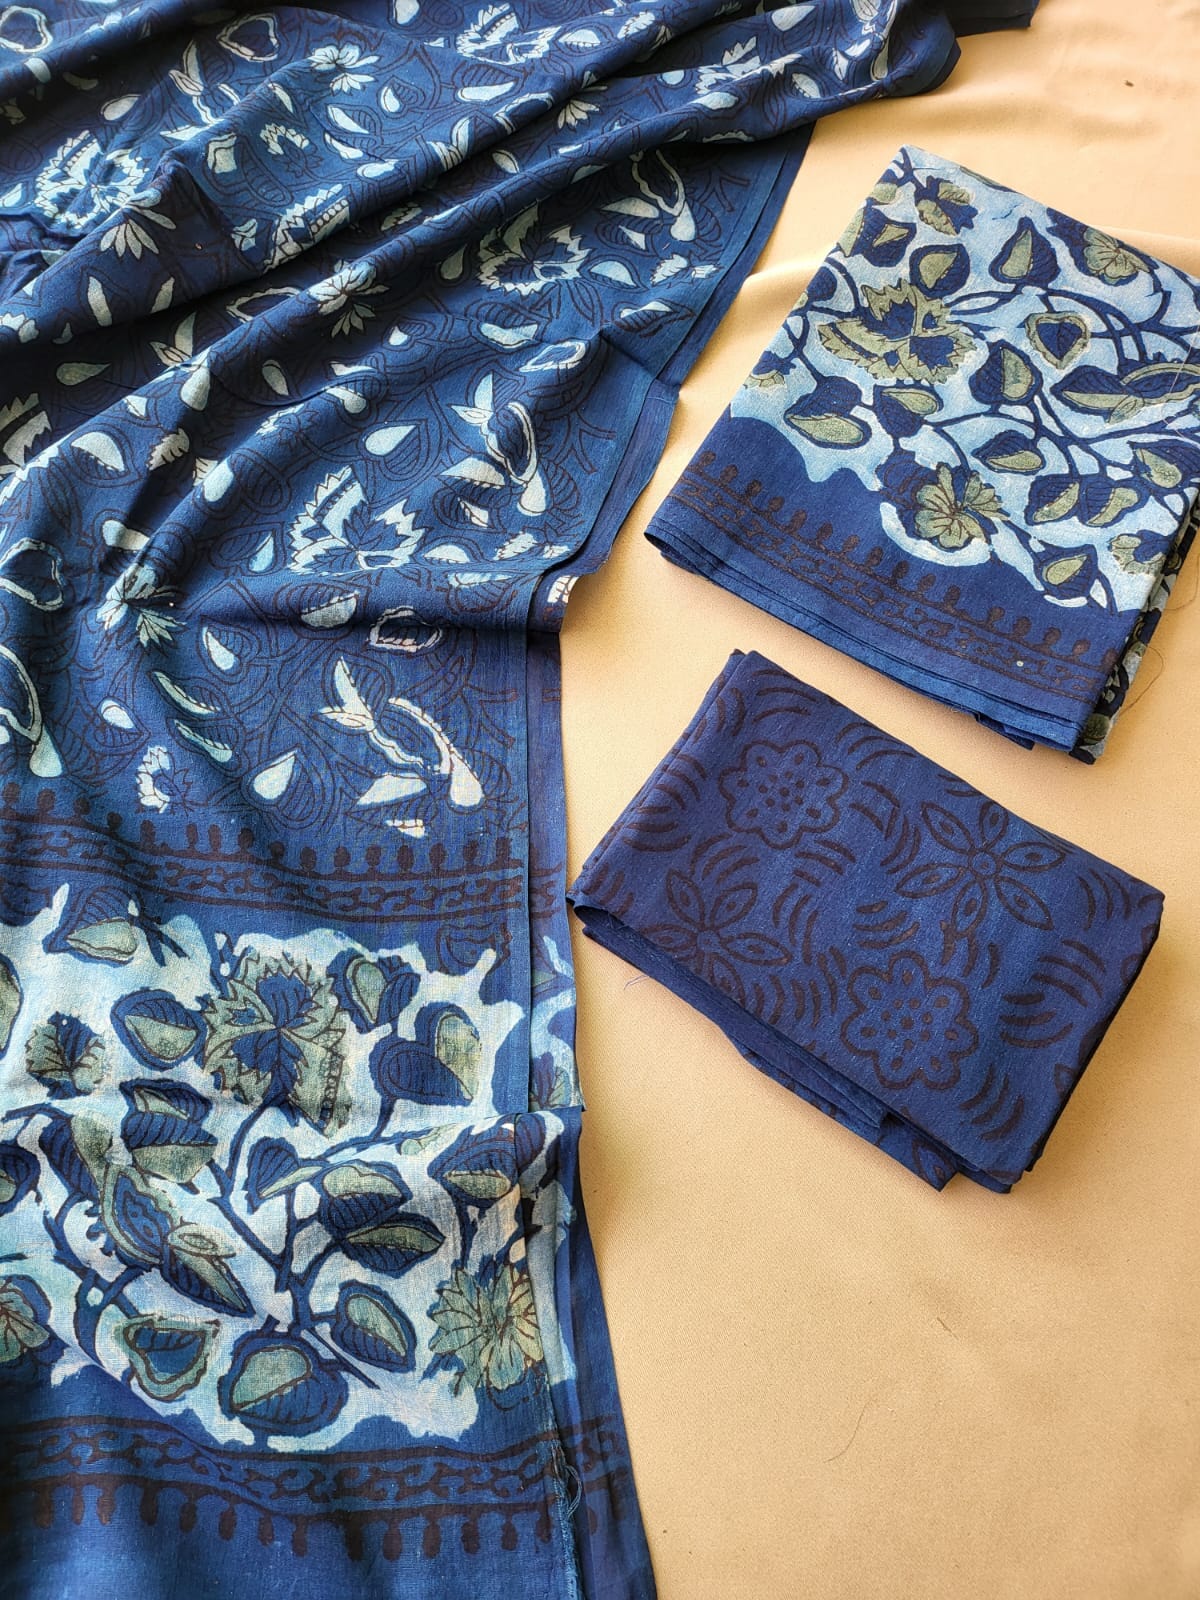 Ethnics of Kutch Cotton Ajrakh Block Print - Natural Dye - DRESS MATERIAL  240 cms Top x 240 cms Bottom x 220 cms Dupatta - Hand Printed - Indic Brands